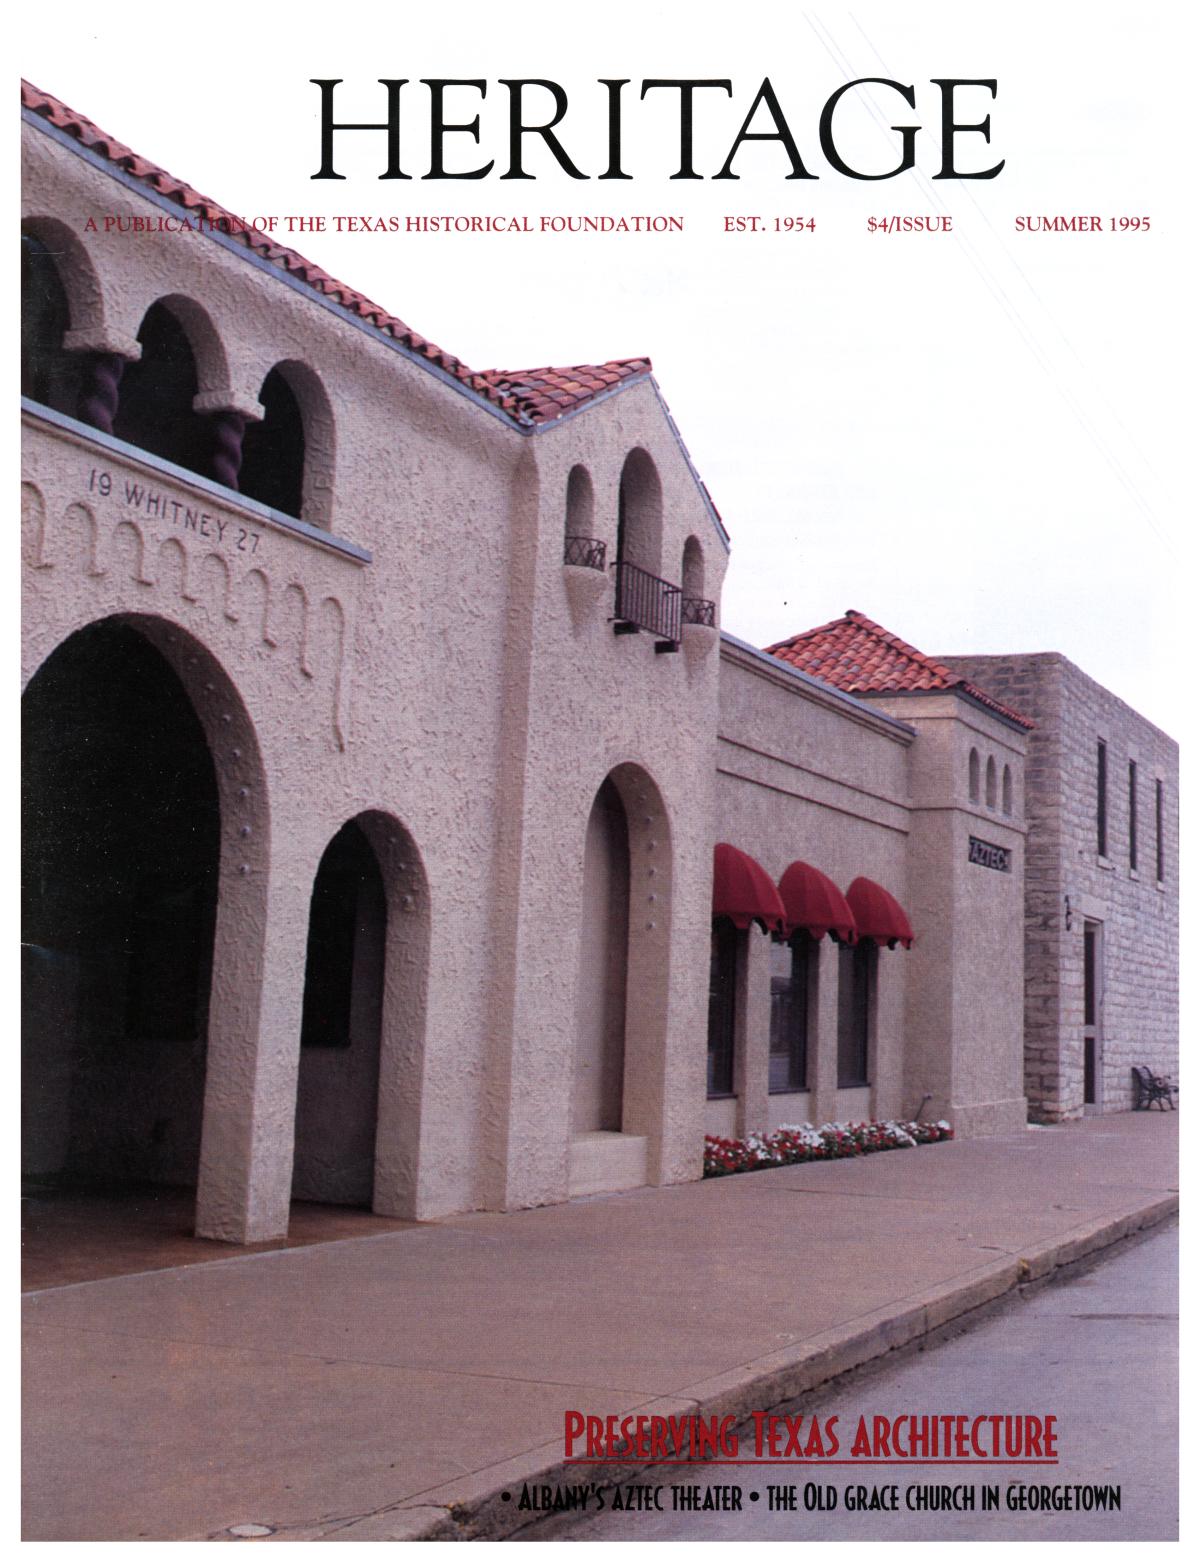 Heritage, Volume 13, Number 3, Summer 1995
                                                
                                                    Front Cover
                                                